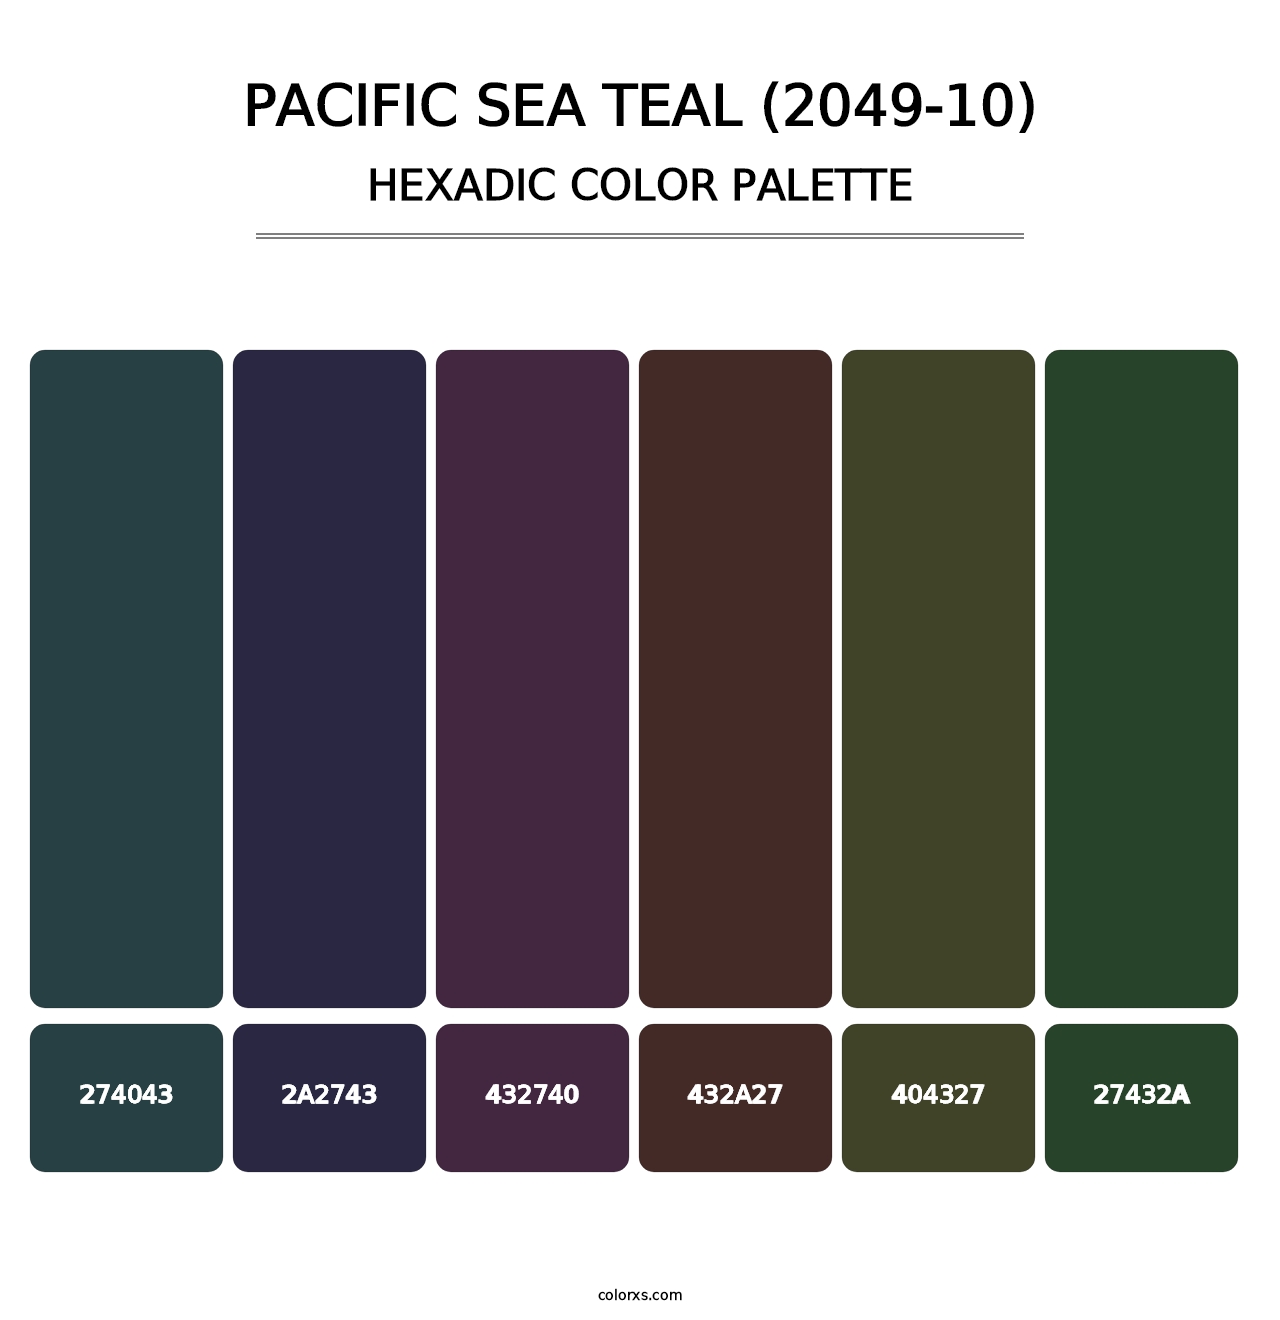 Pacific Sea Teal (2049-10) - Hexadic Color Palette